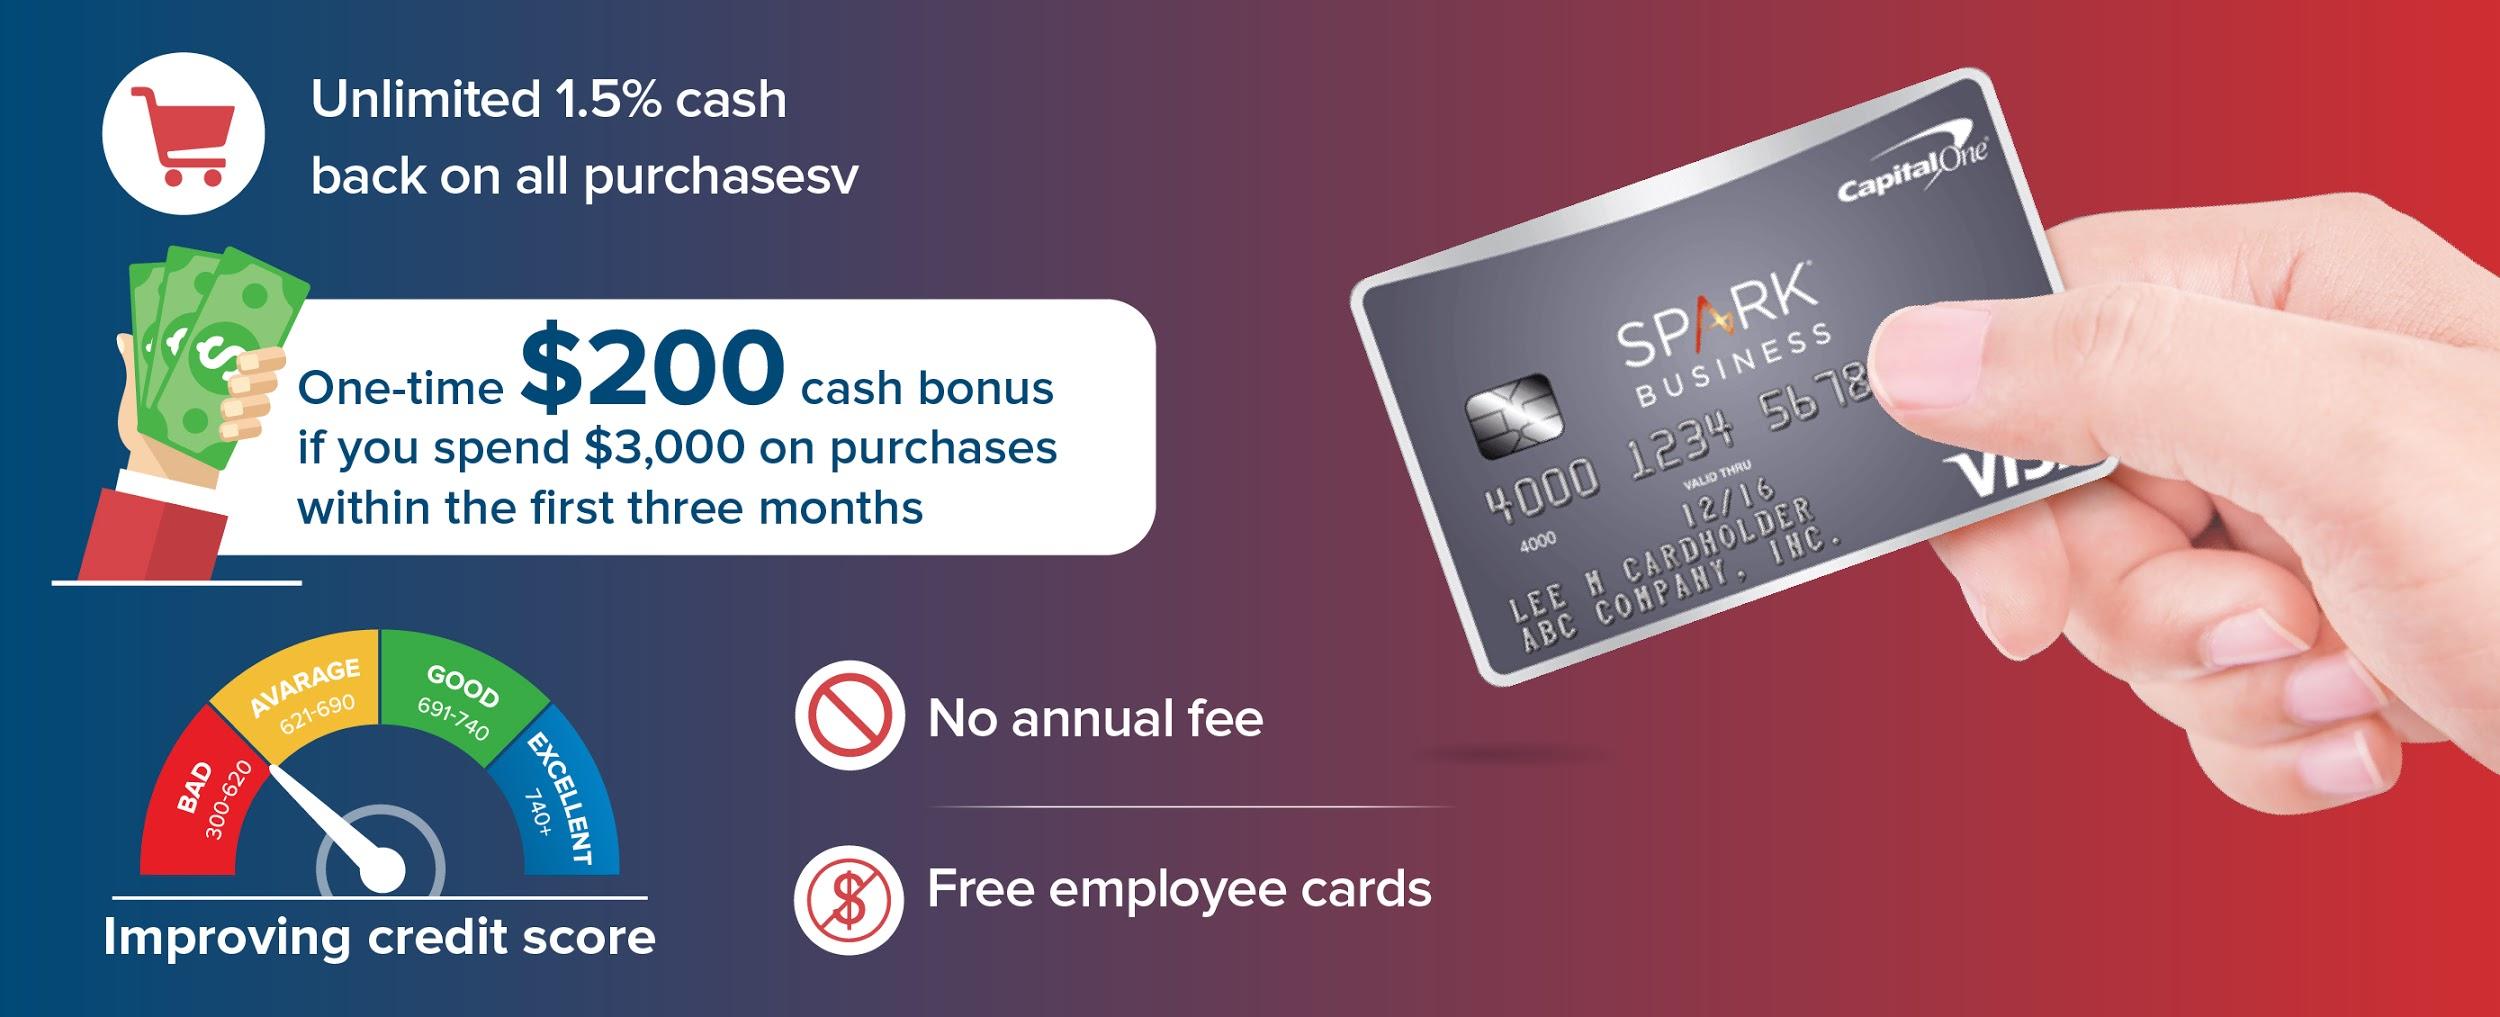 capital-one-cash-rewards-credit-cards-creditloan